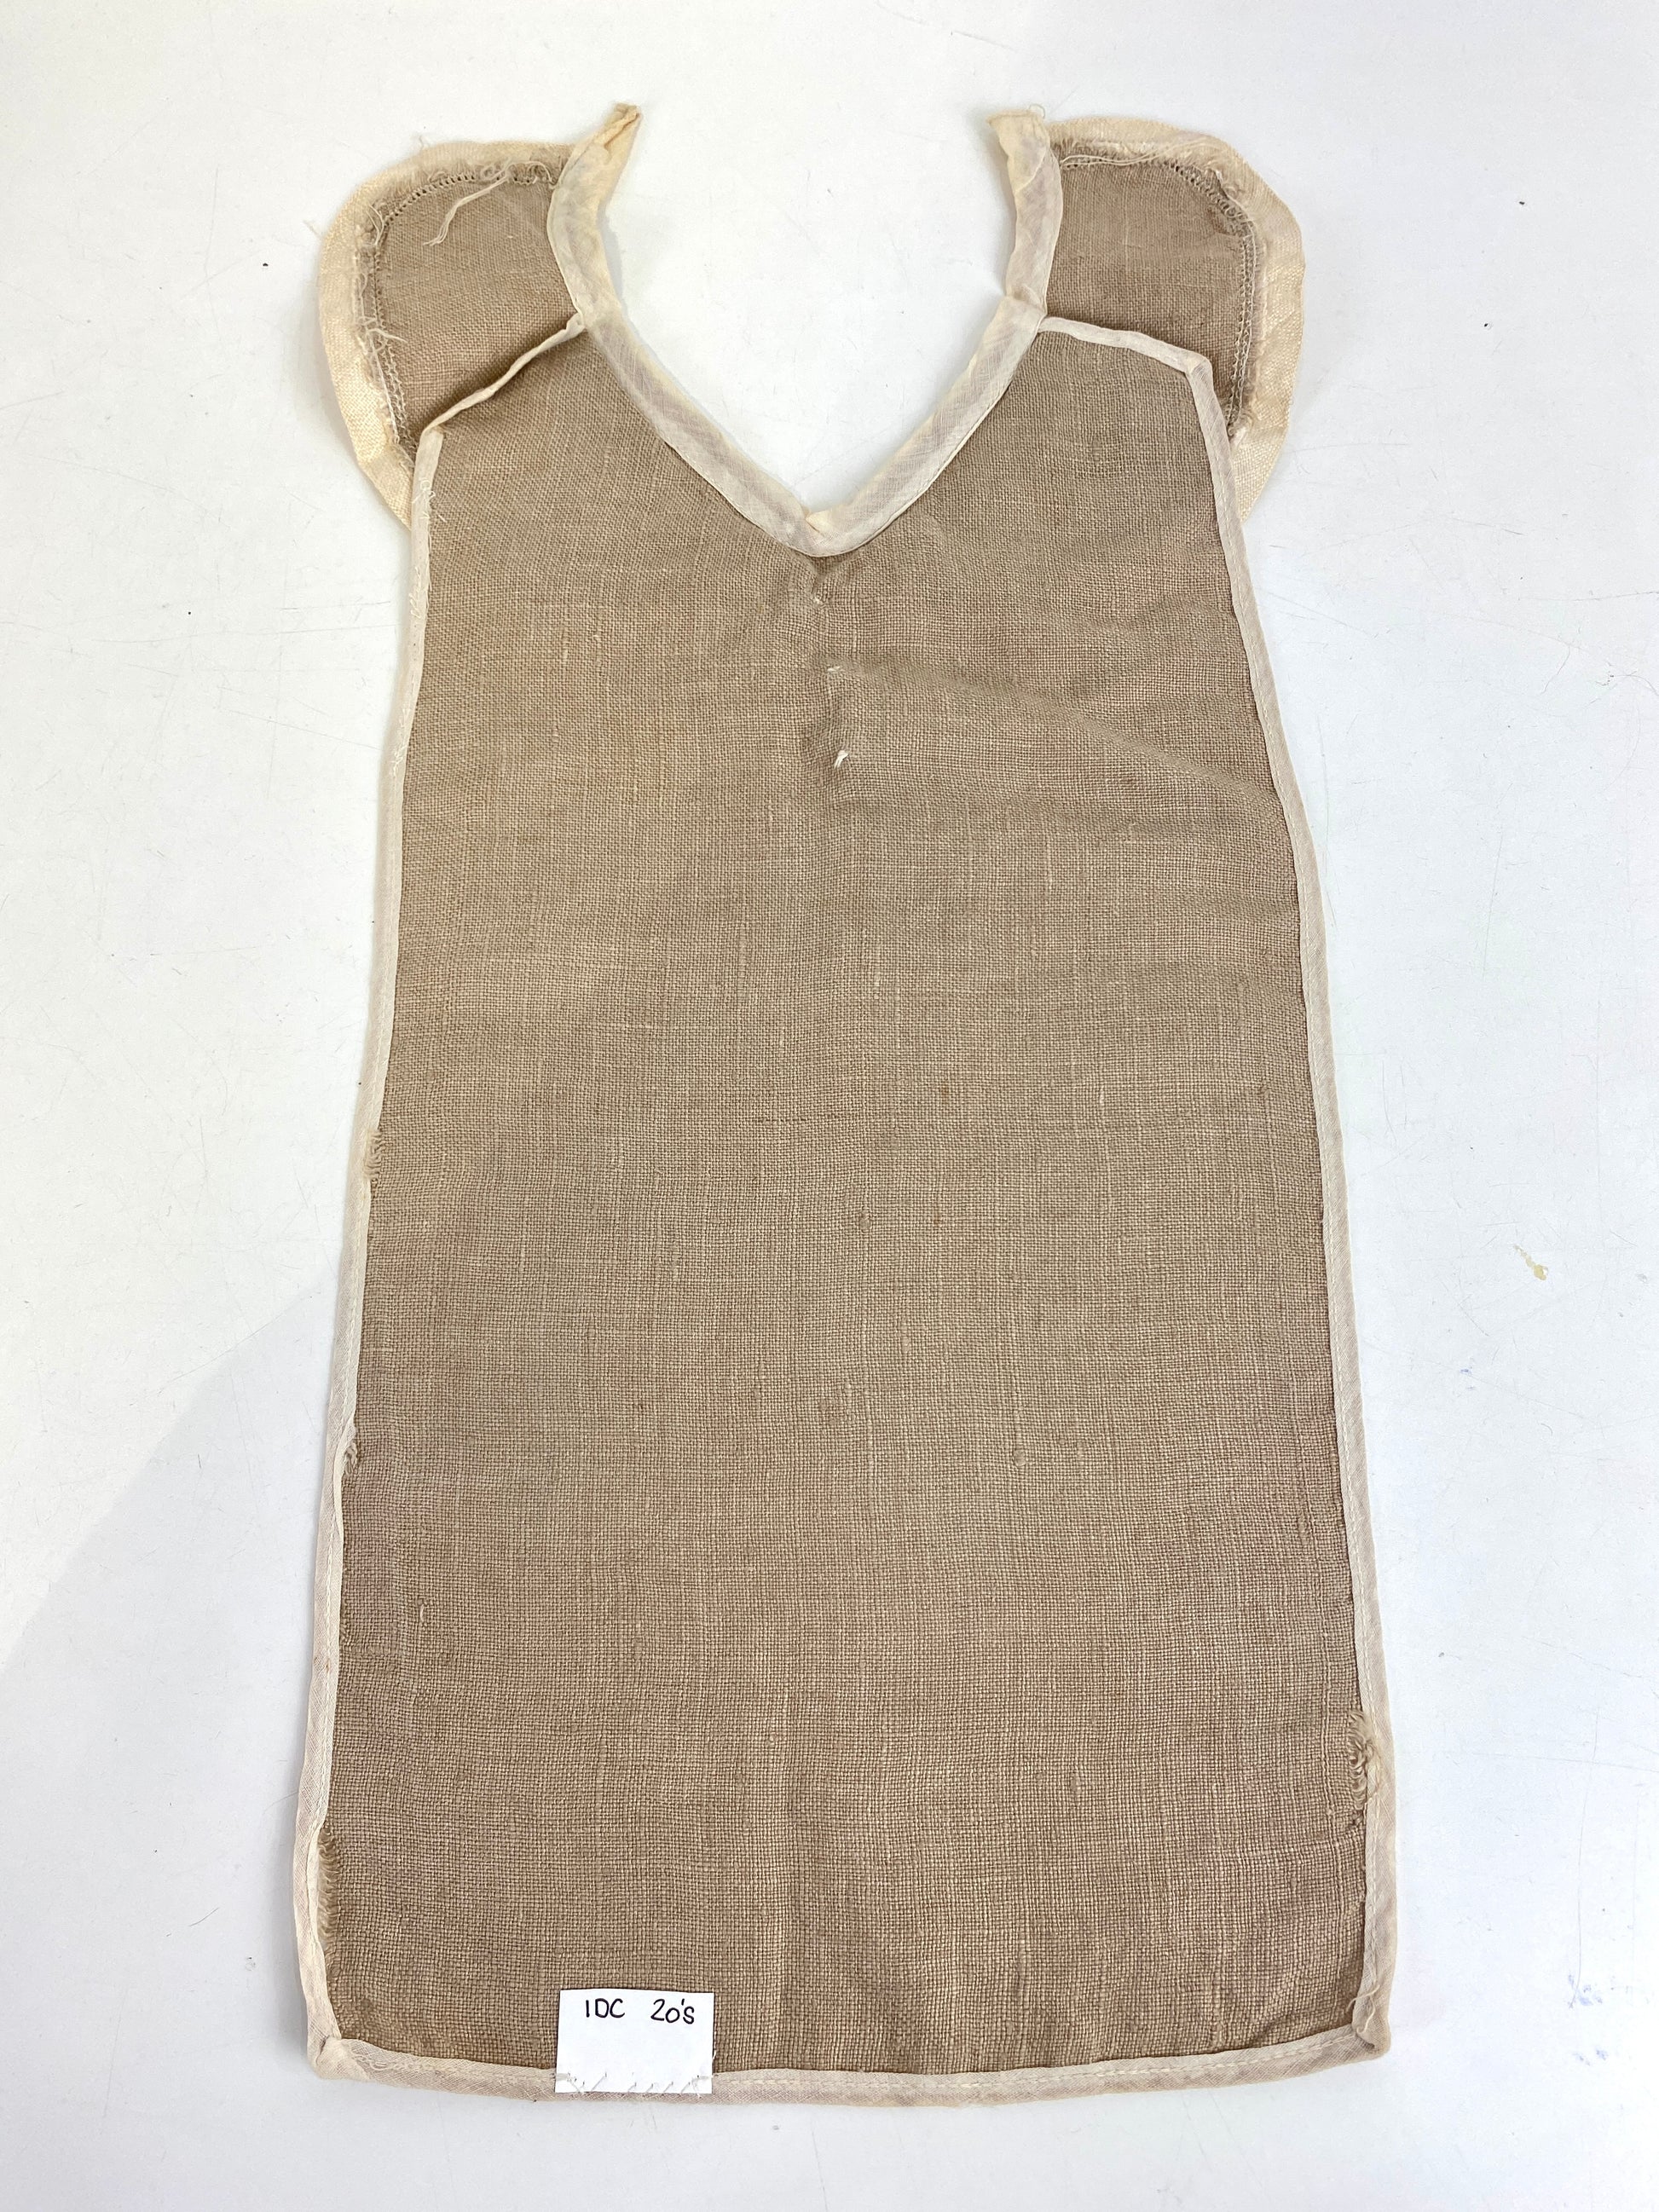 Vintage 1920s Brown Linen Bib with Peter Pan Collar